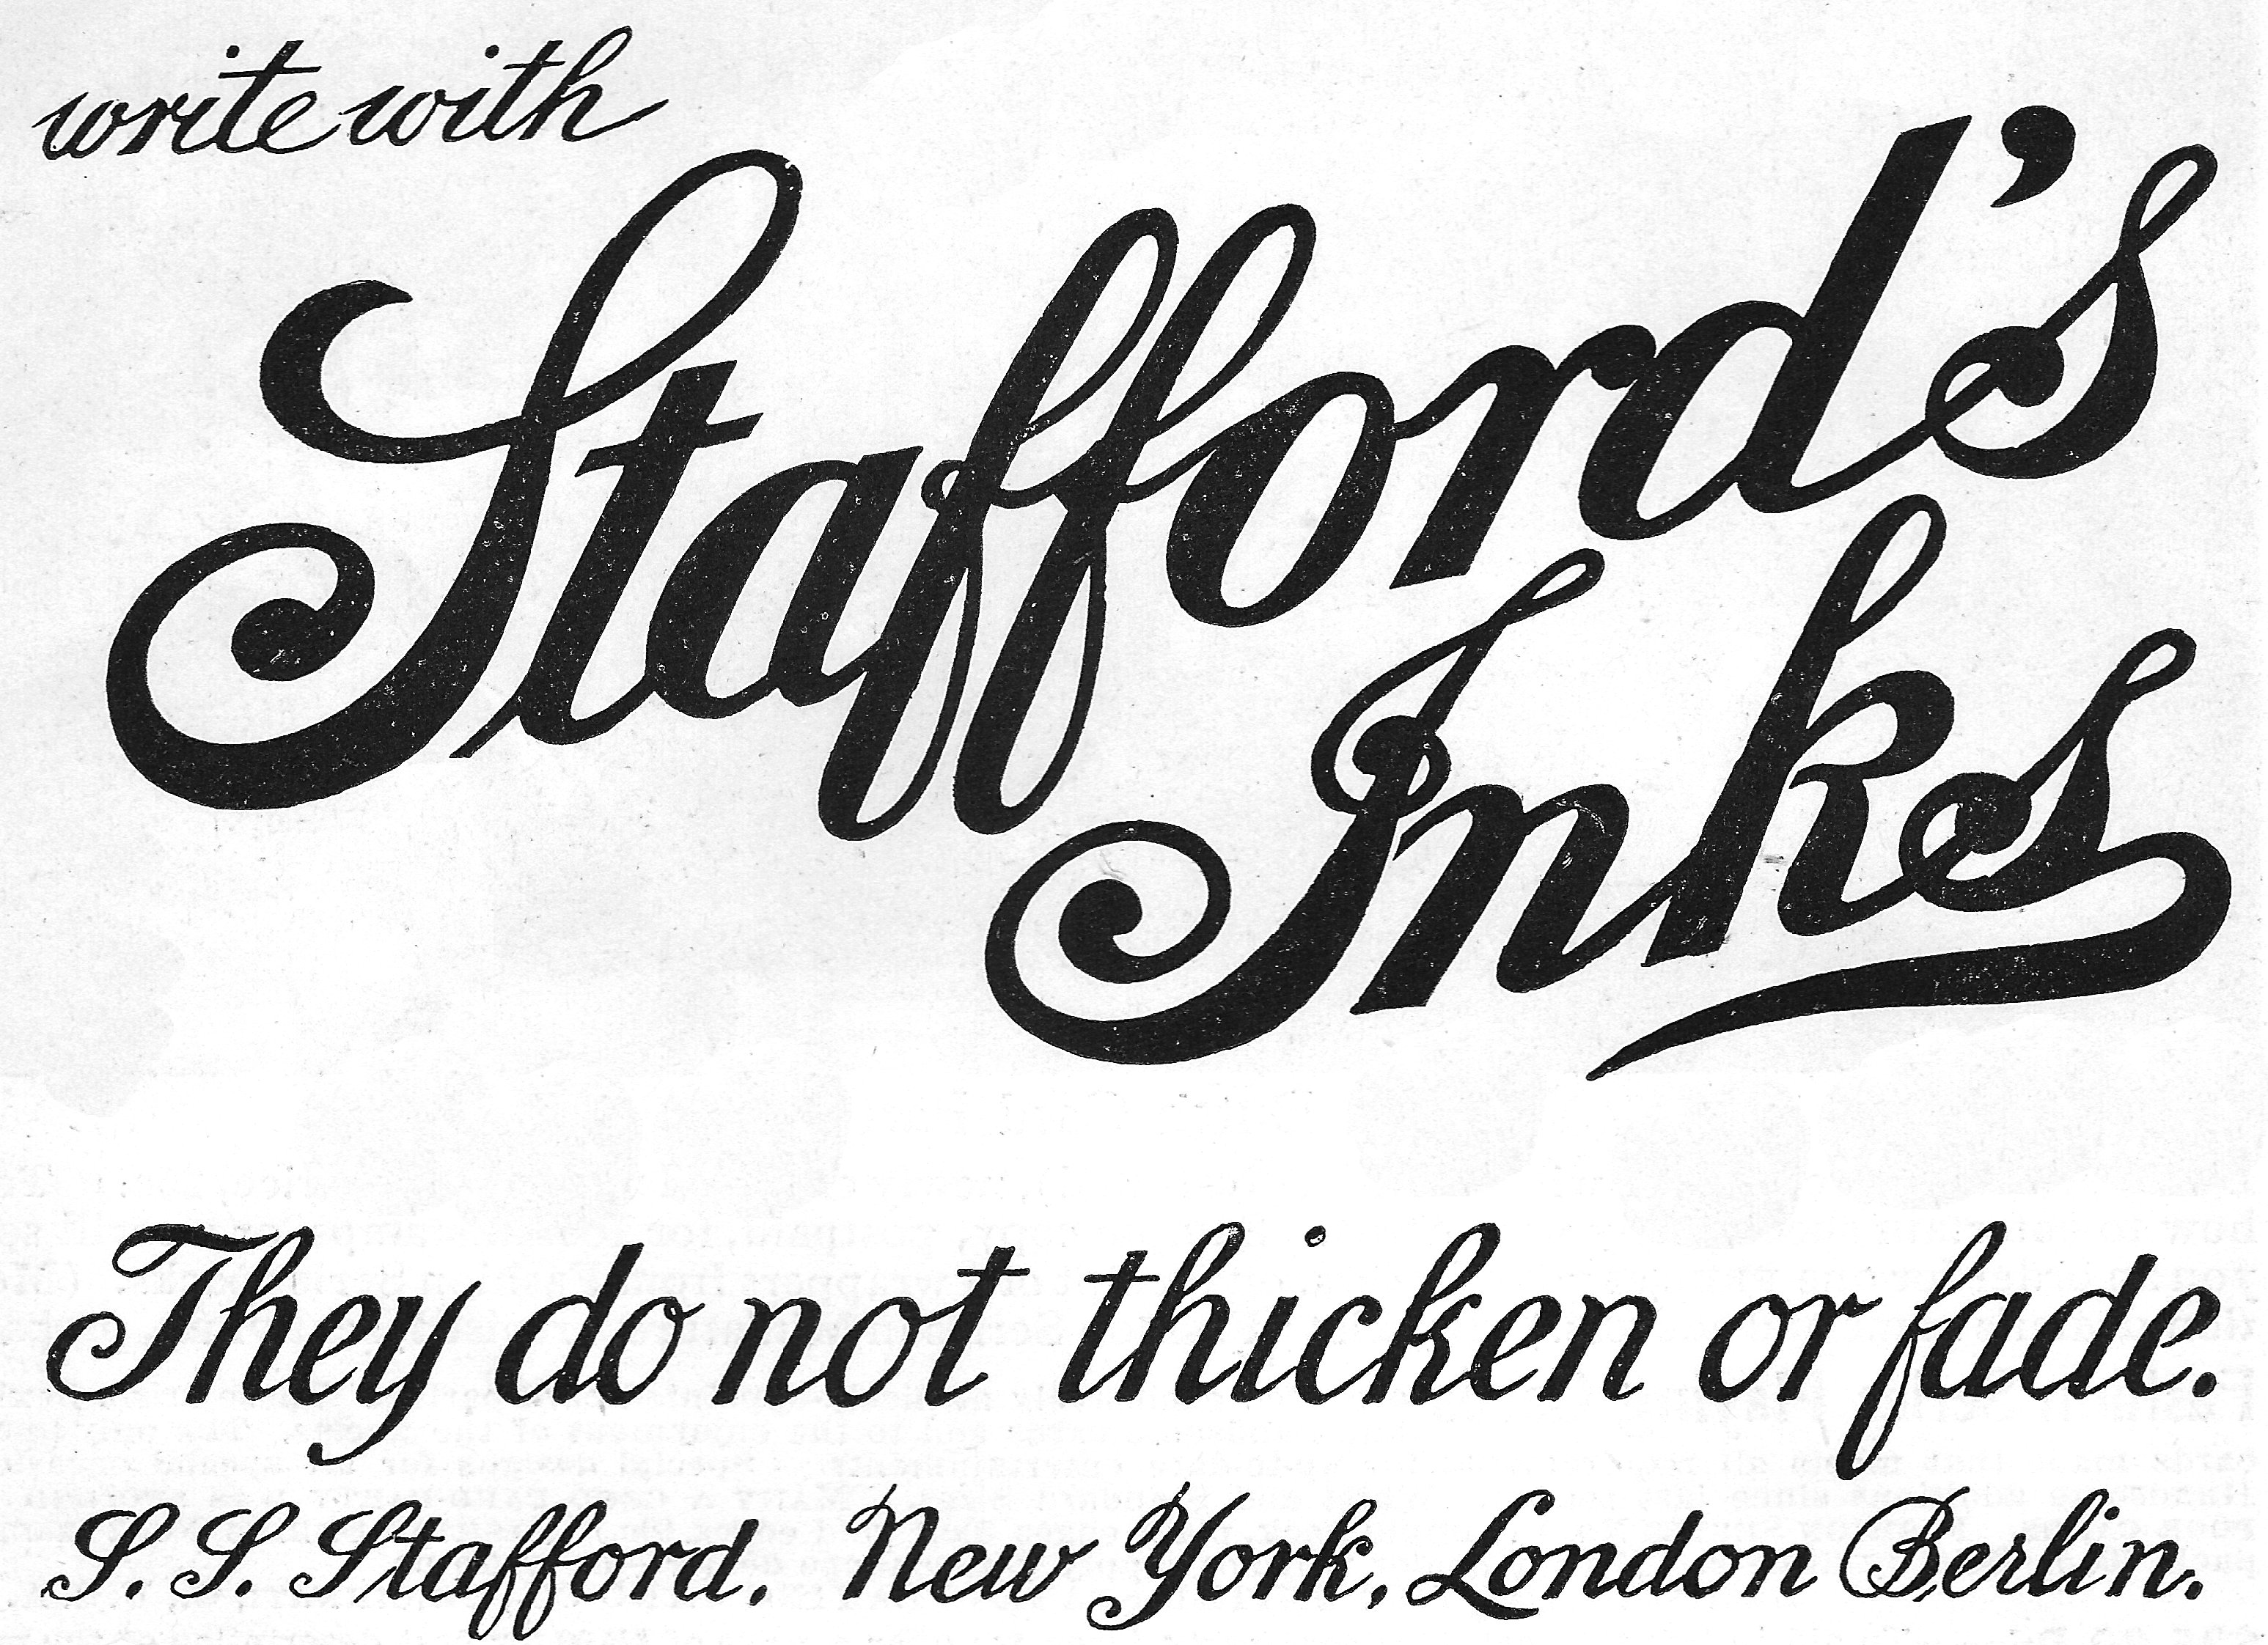 1899-Staffords-Ink.jpg